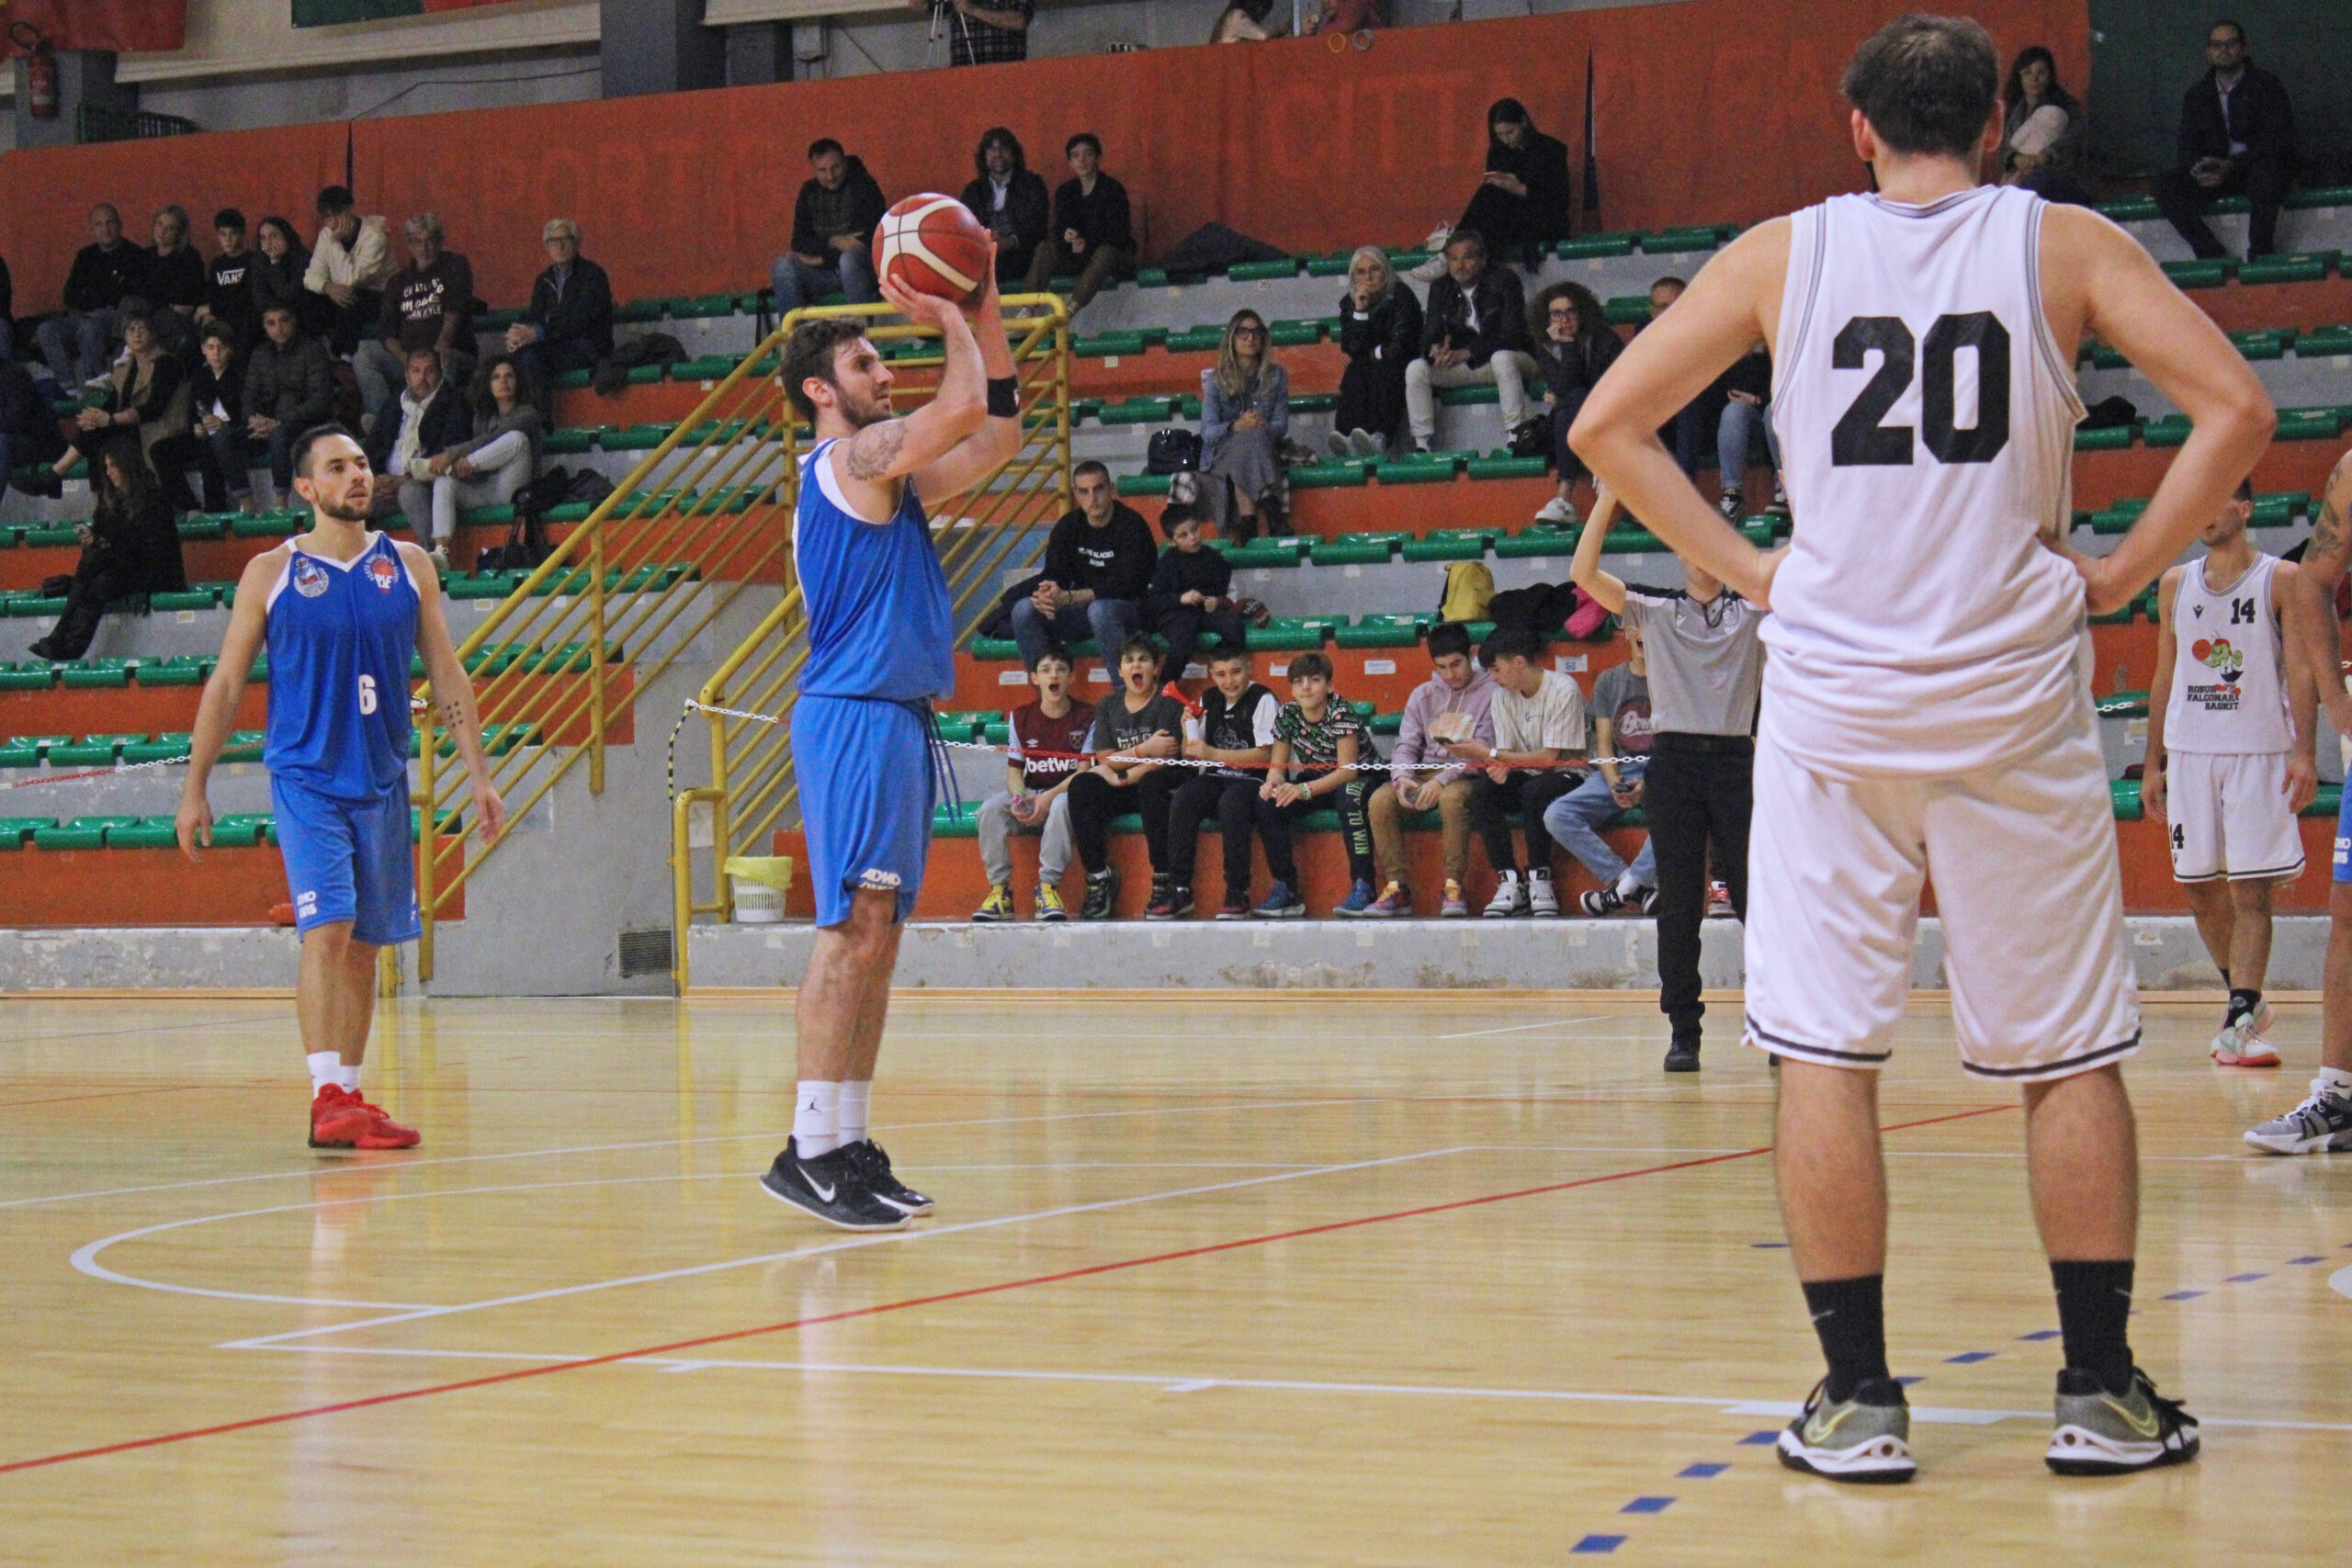 Falconara Basket - PSE Basket 65-73: definizione di 